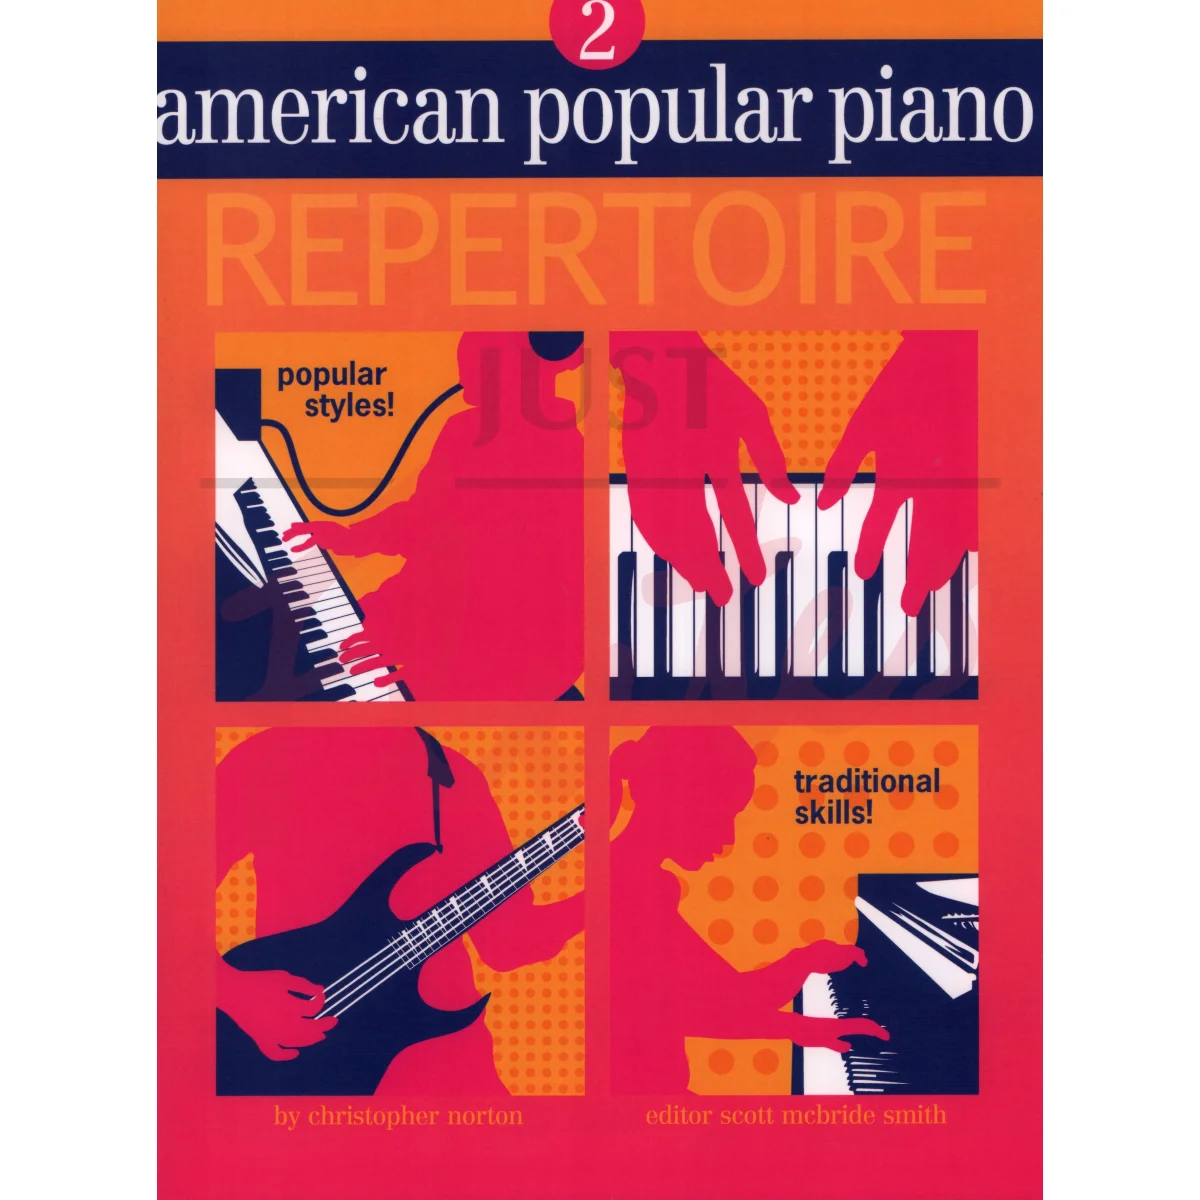 American Popular Piano Repertoire Book 2